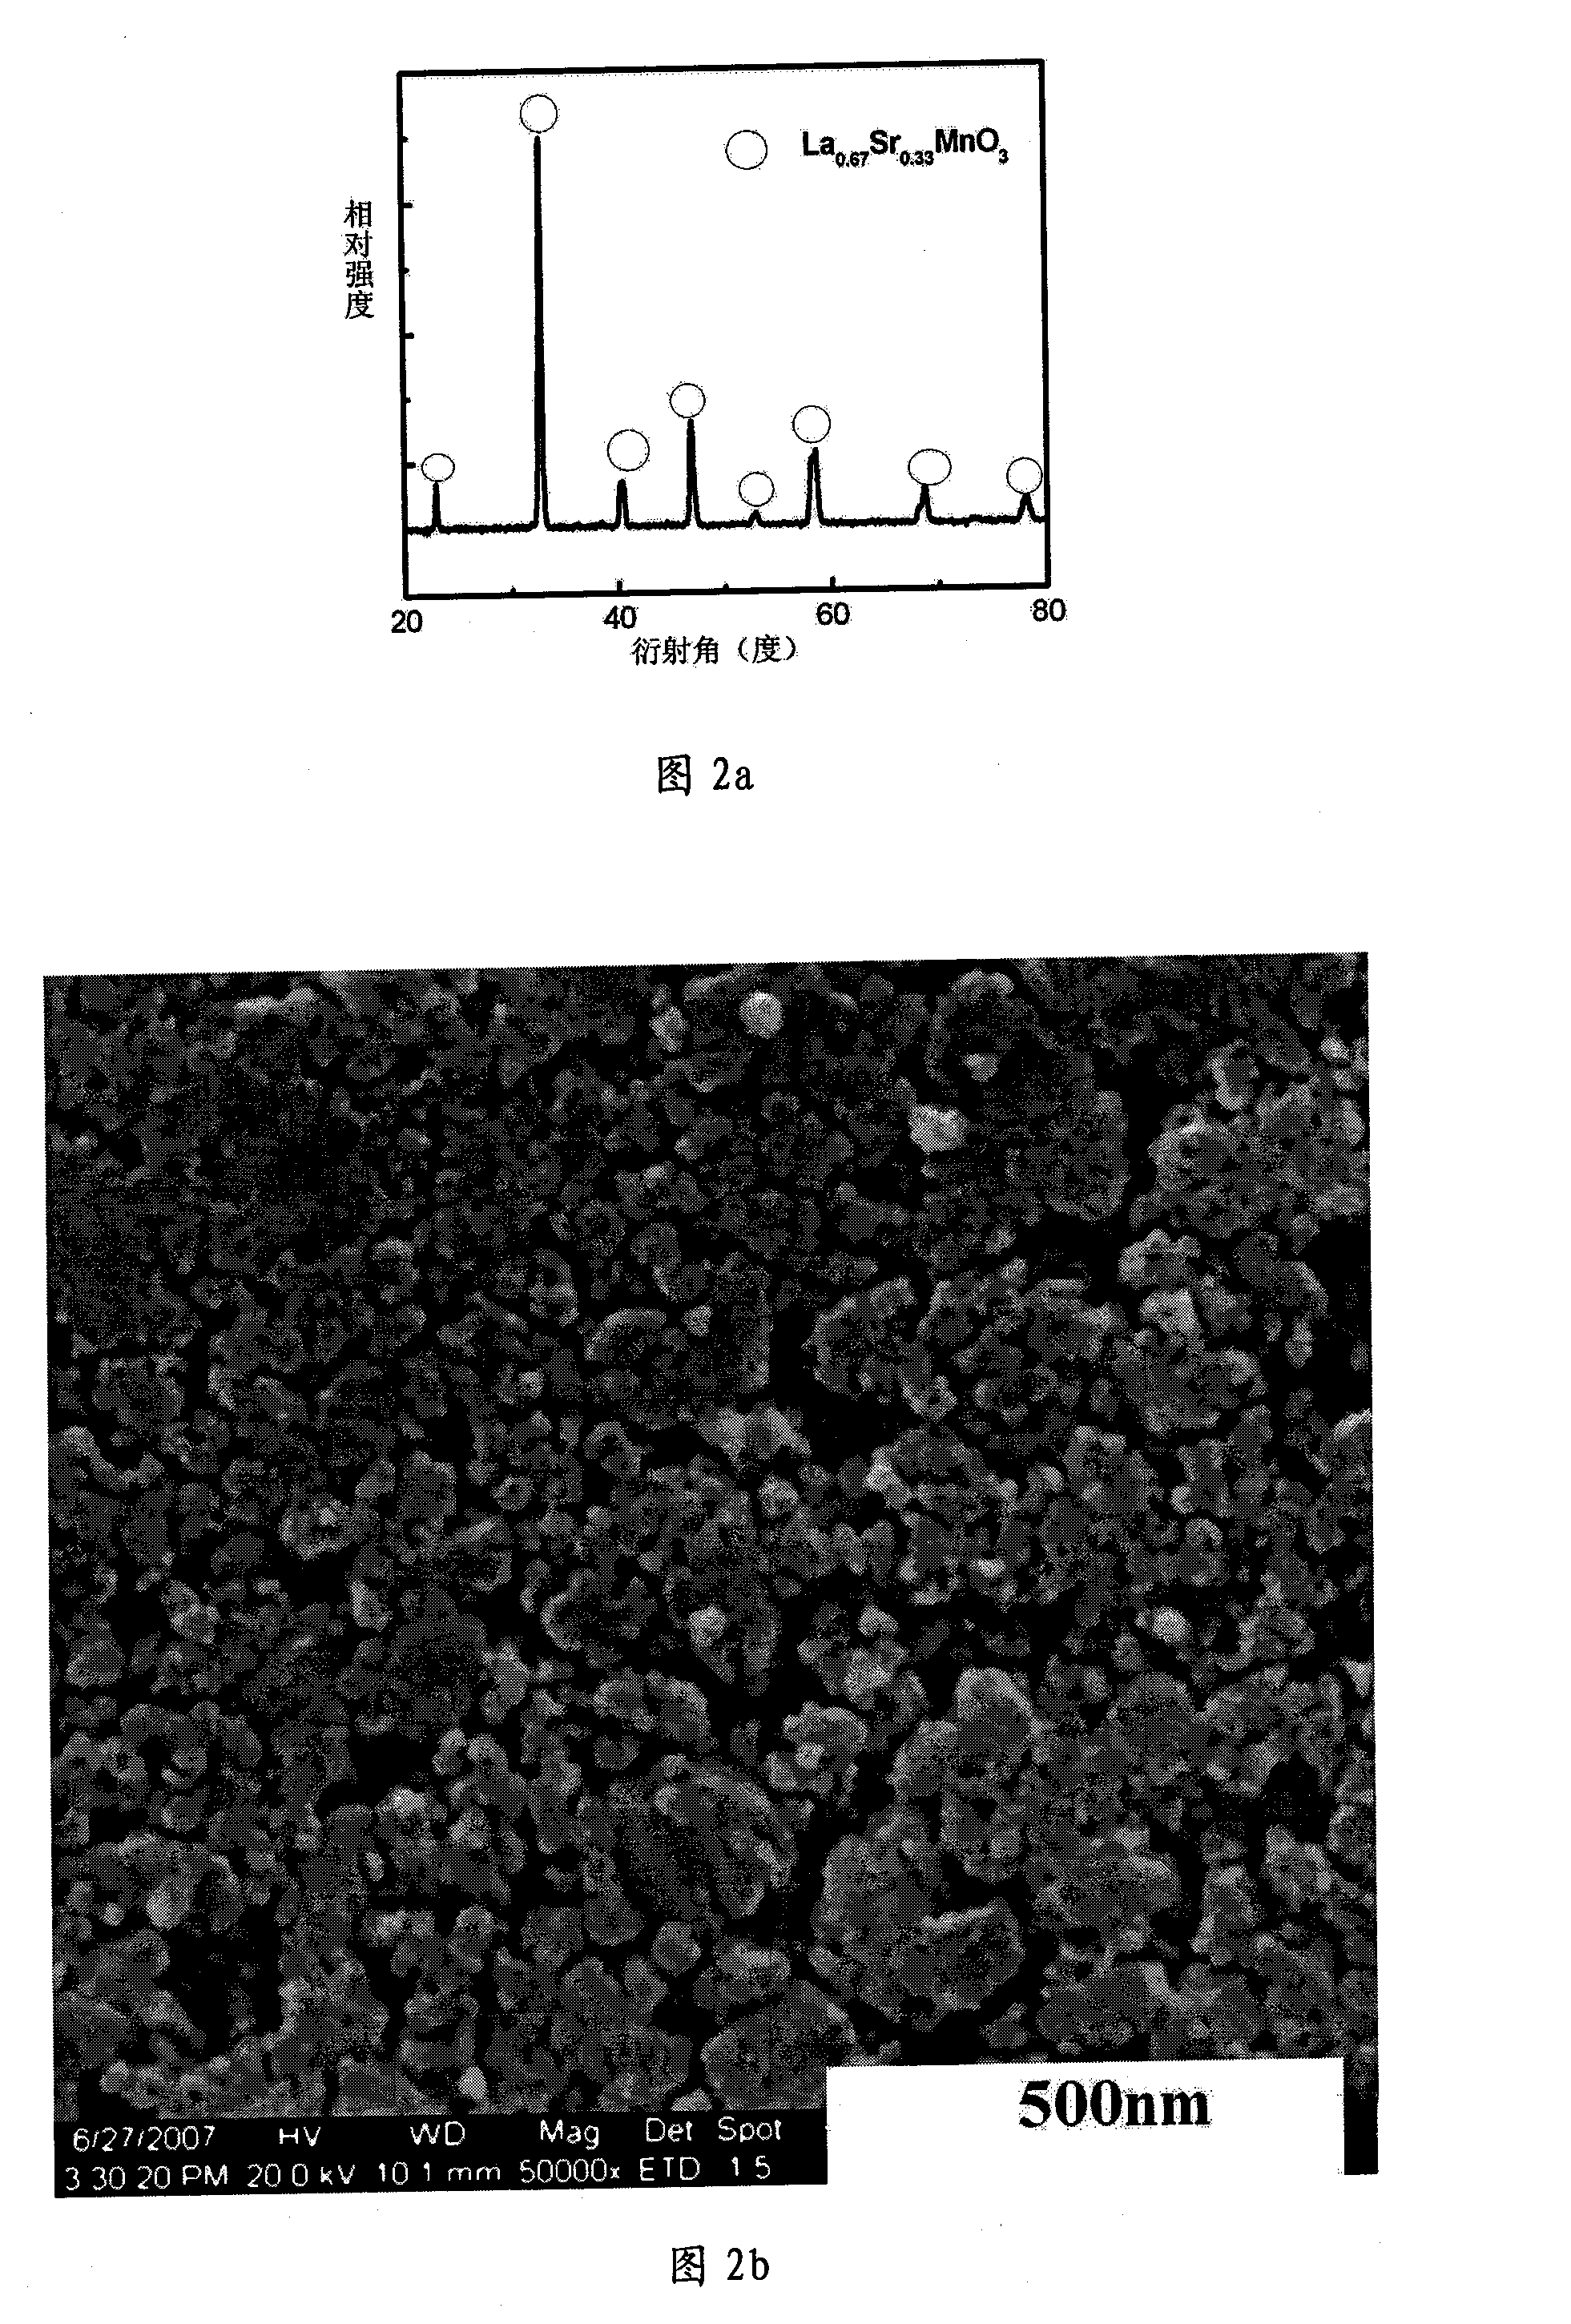 Method for preparing nano lanthanum-strontium-manganese oxide